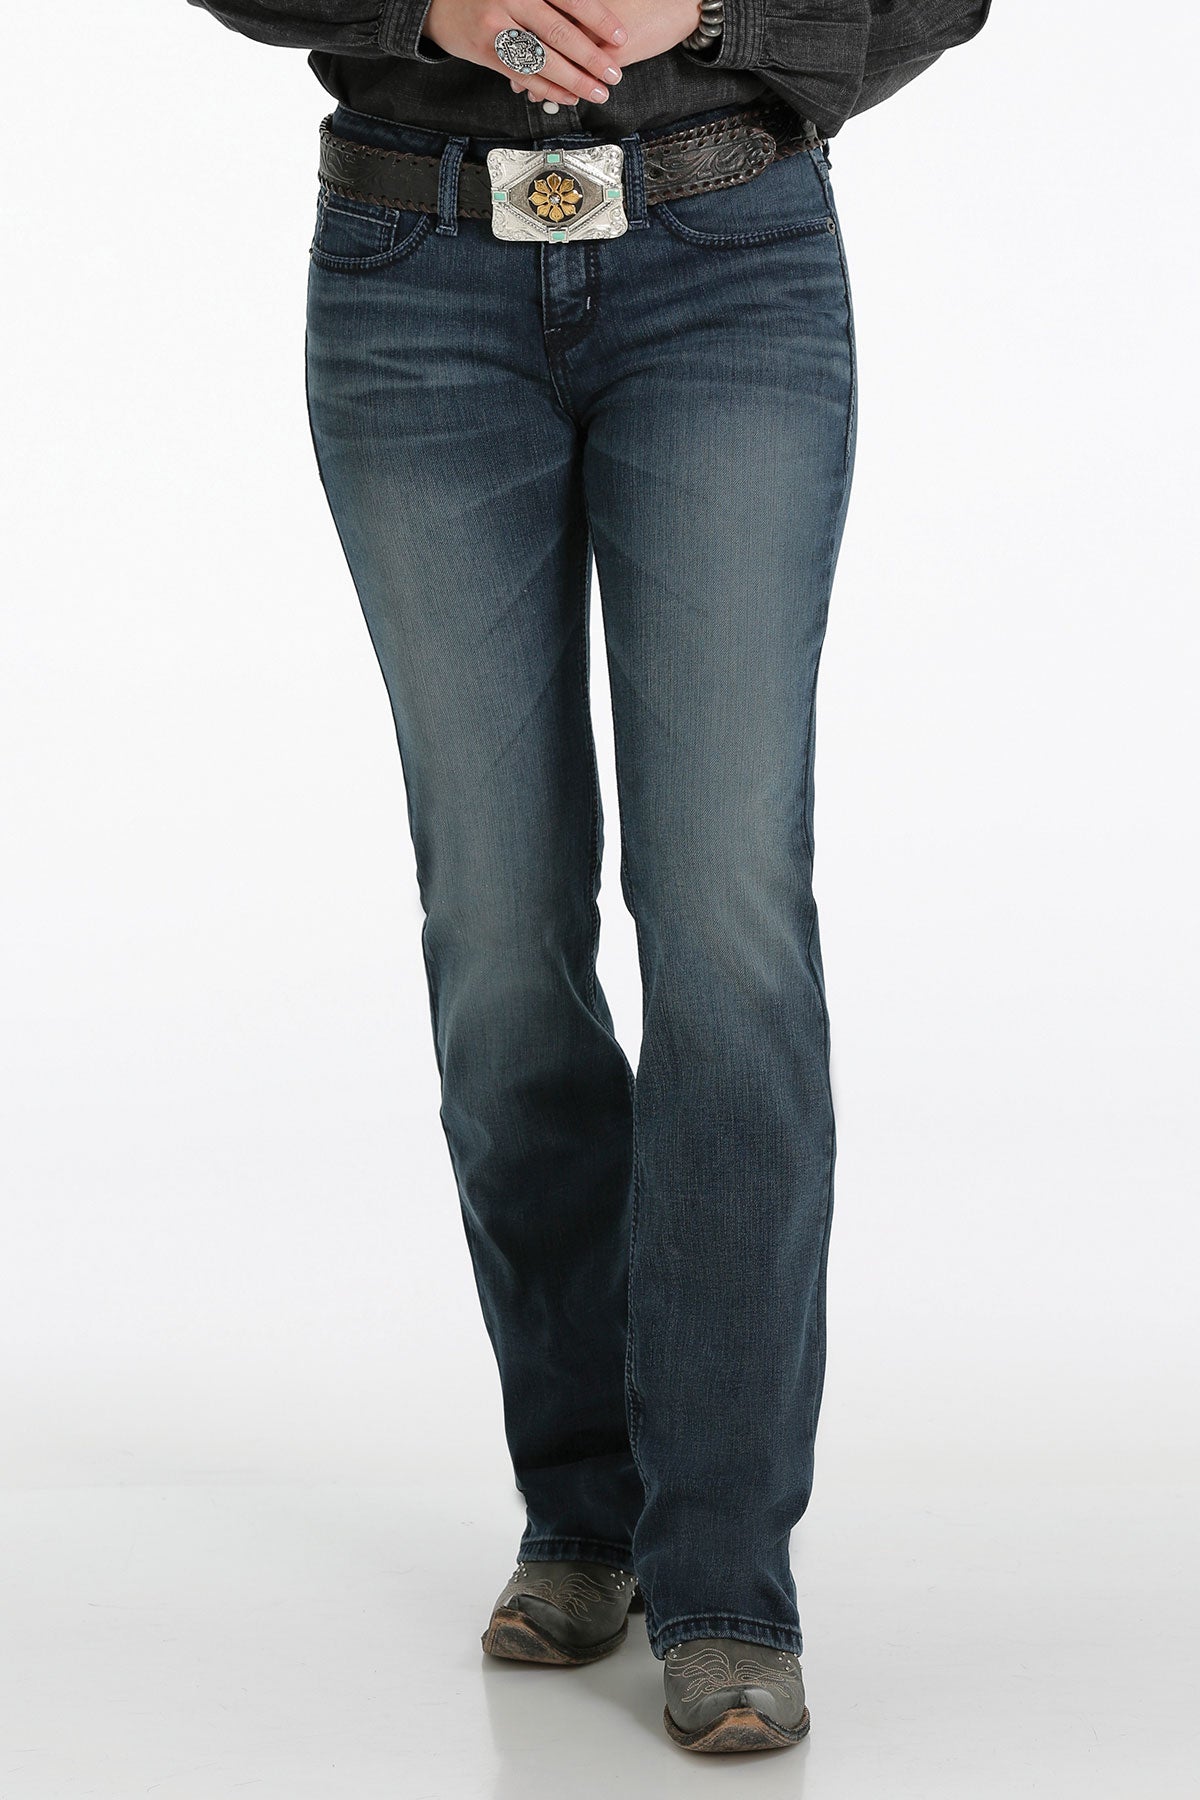 Women's Bootcut Jeans - Denim for Women